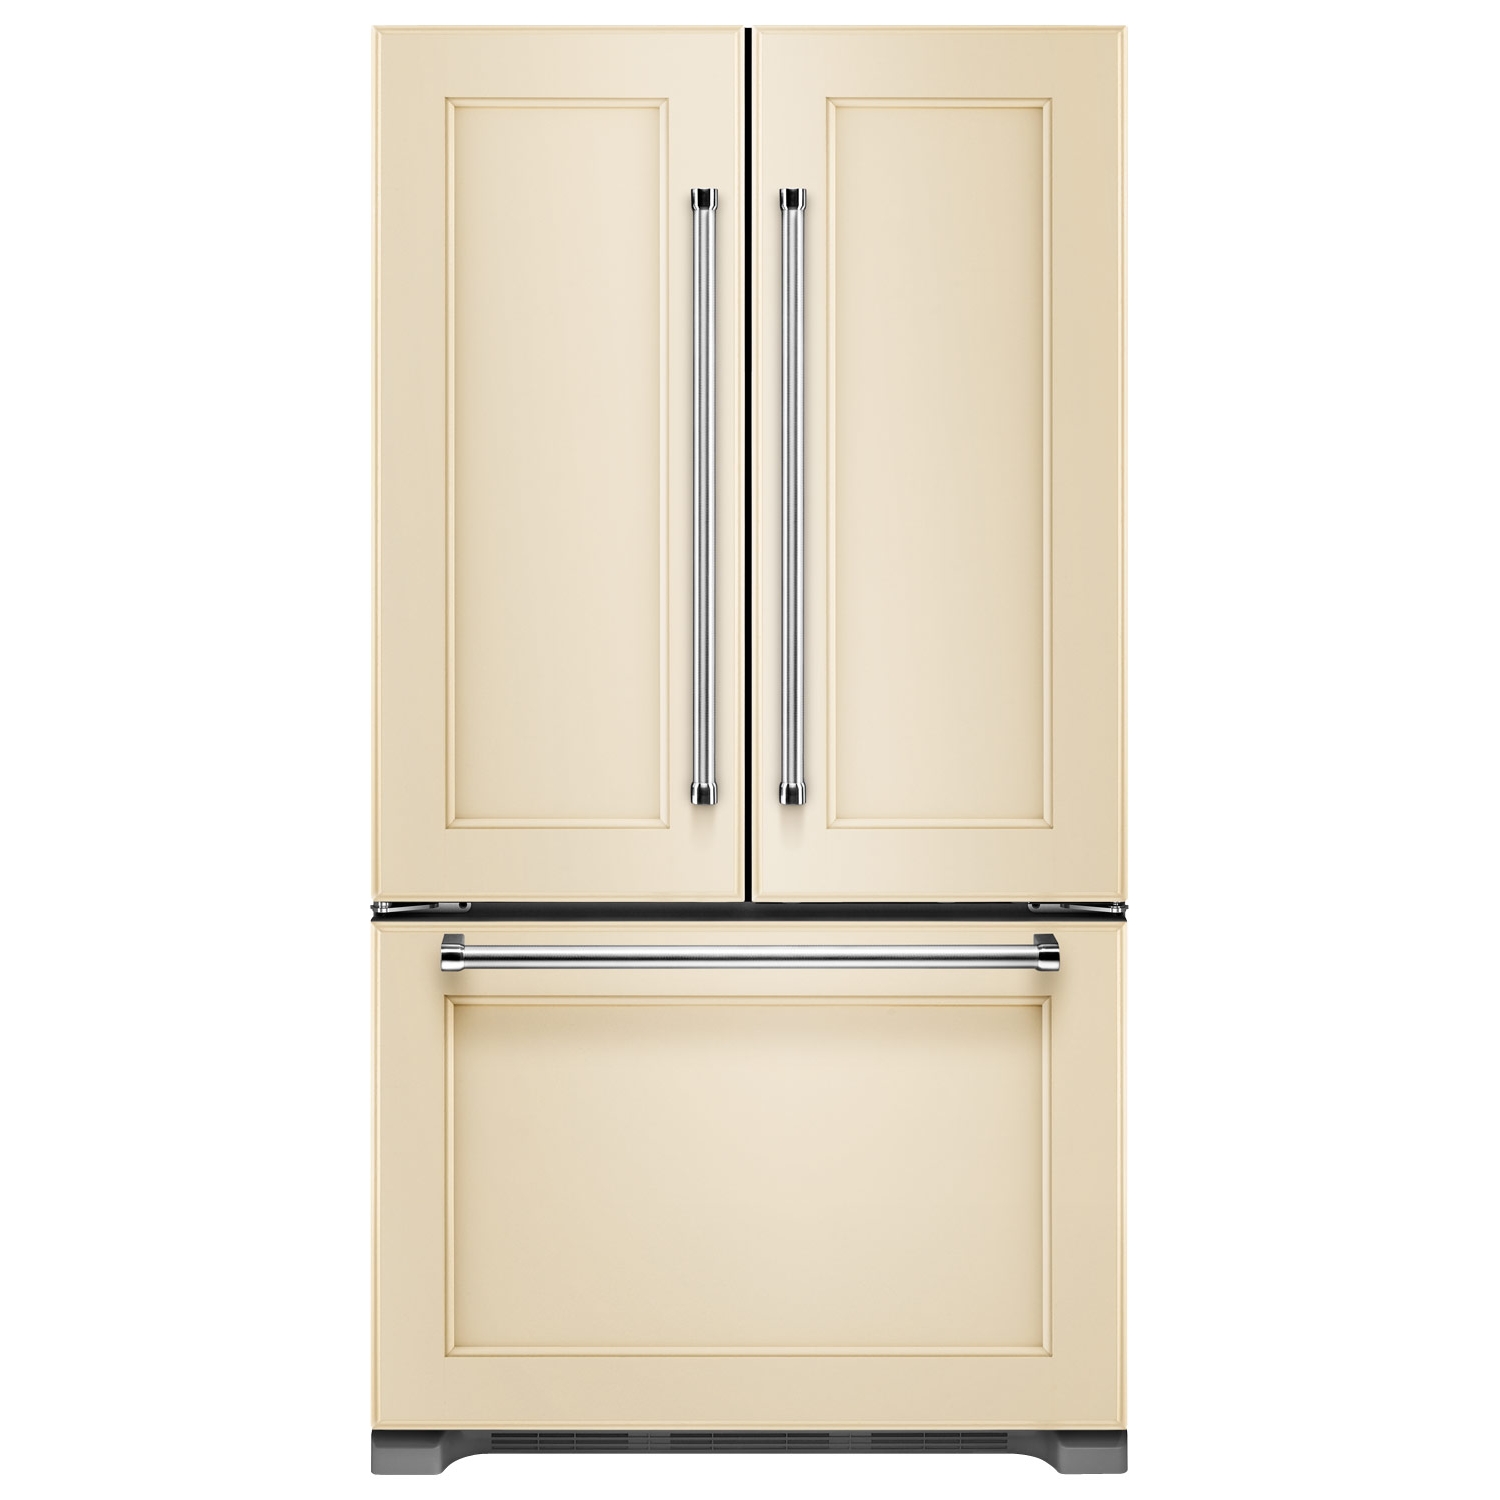 Buy KitchenAid Refrigerator KRFC302EPA